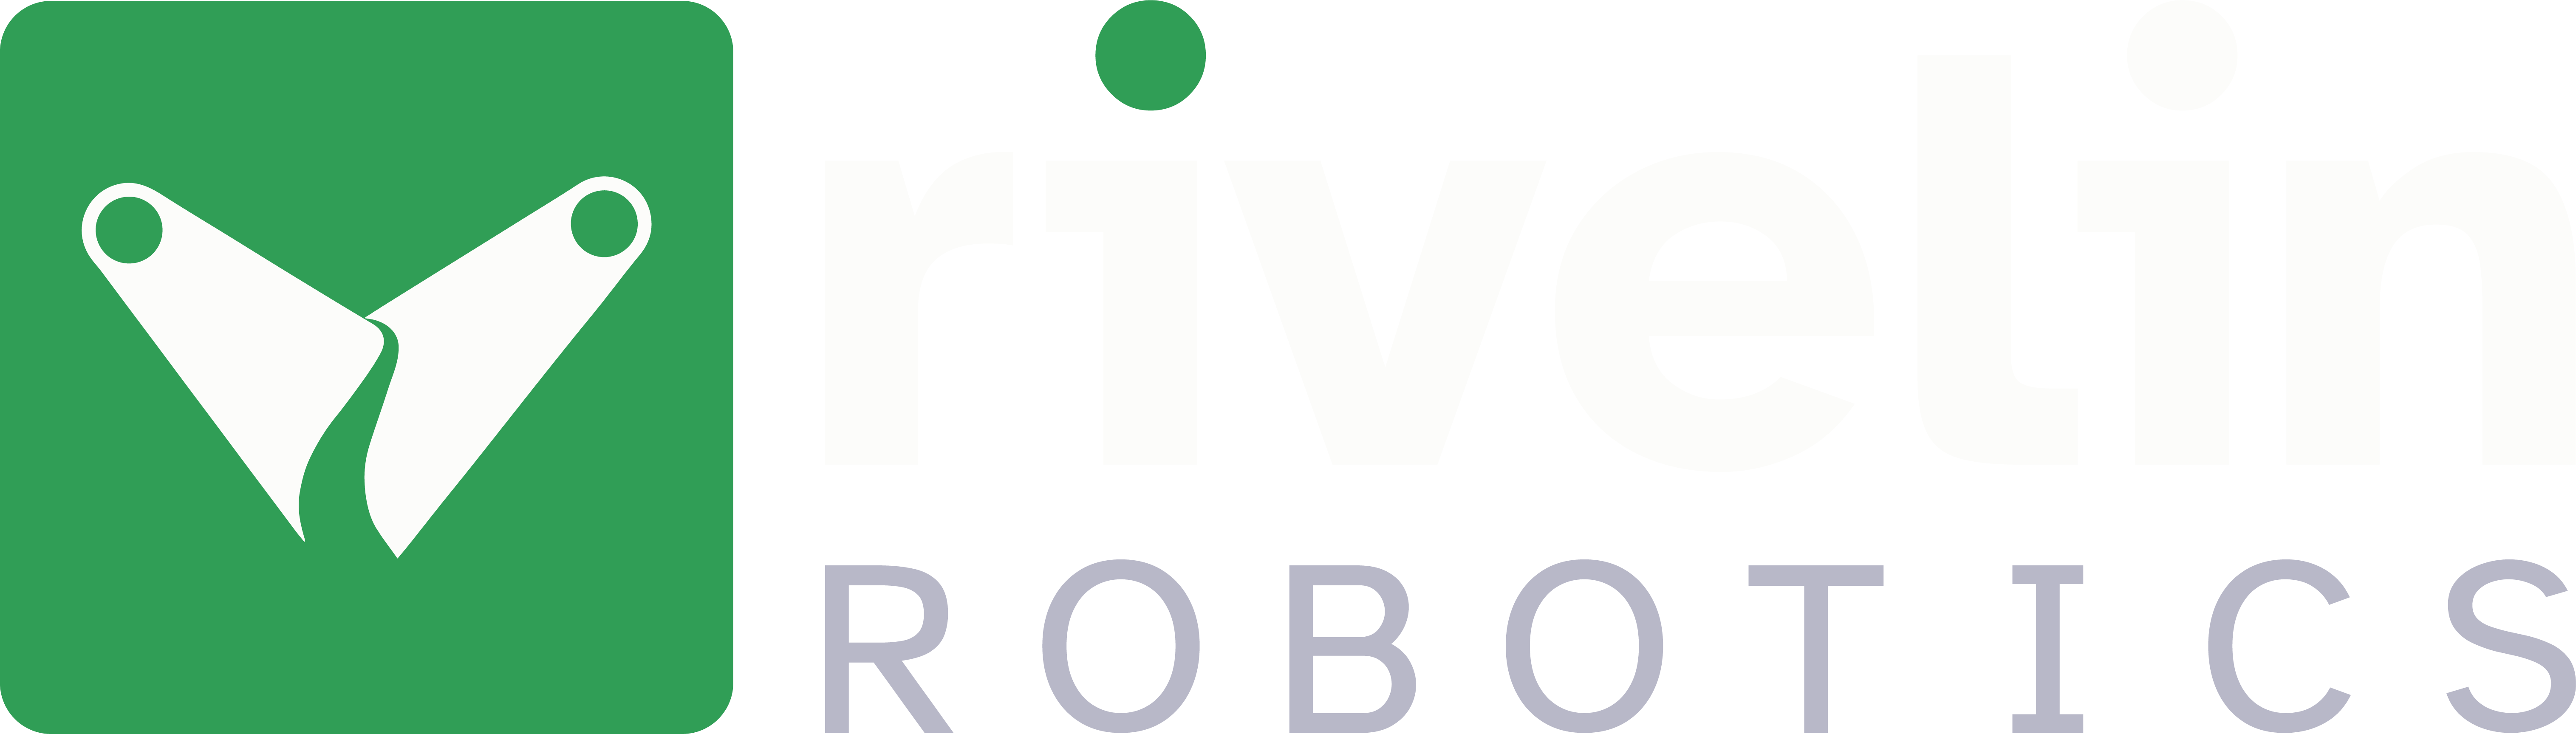 Rivelin Robotics